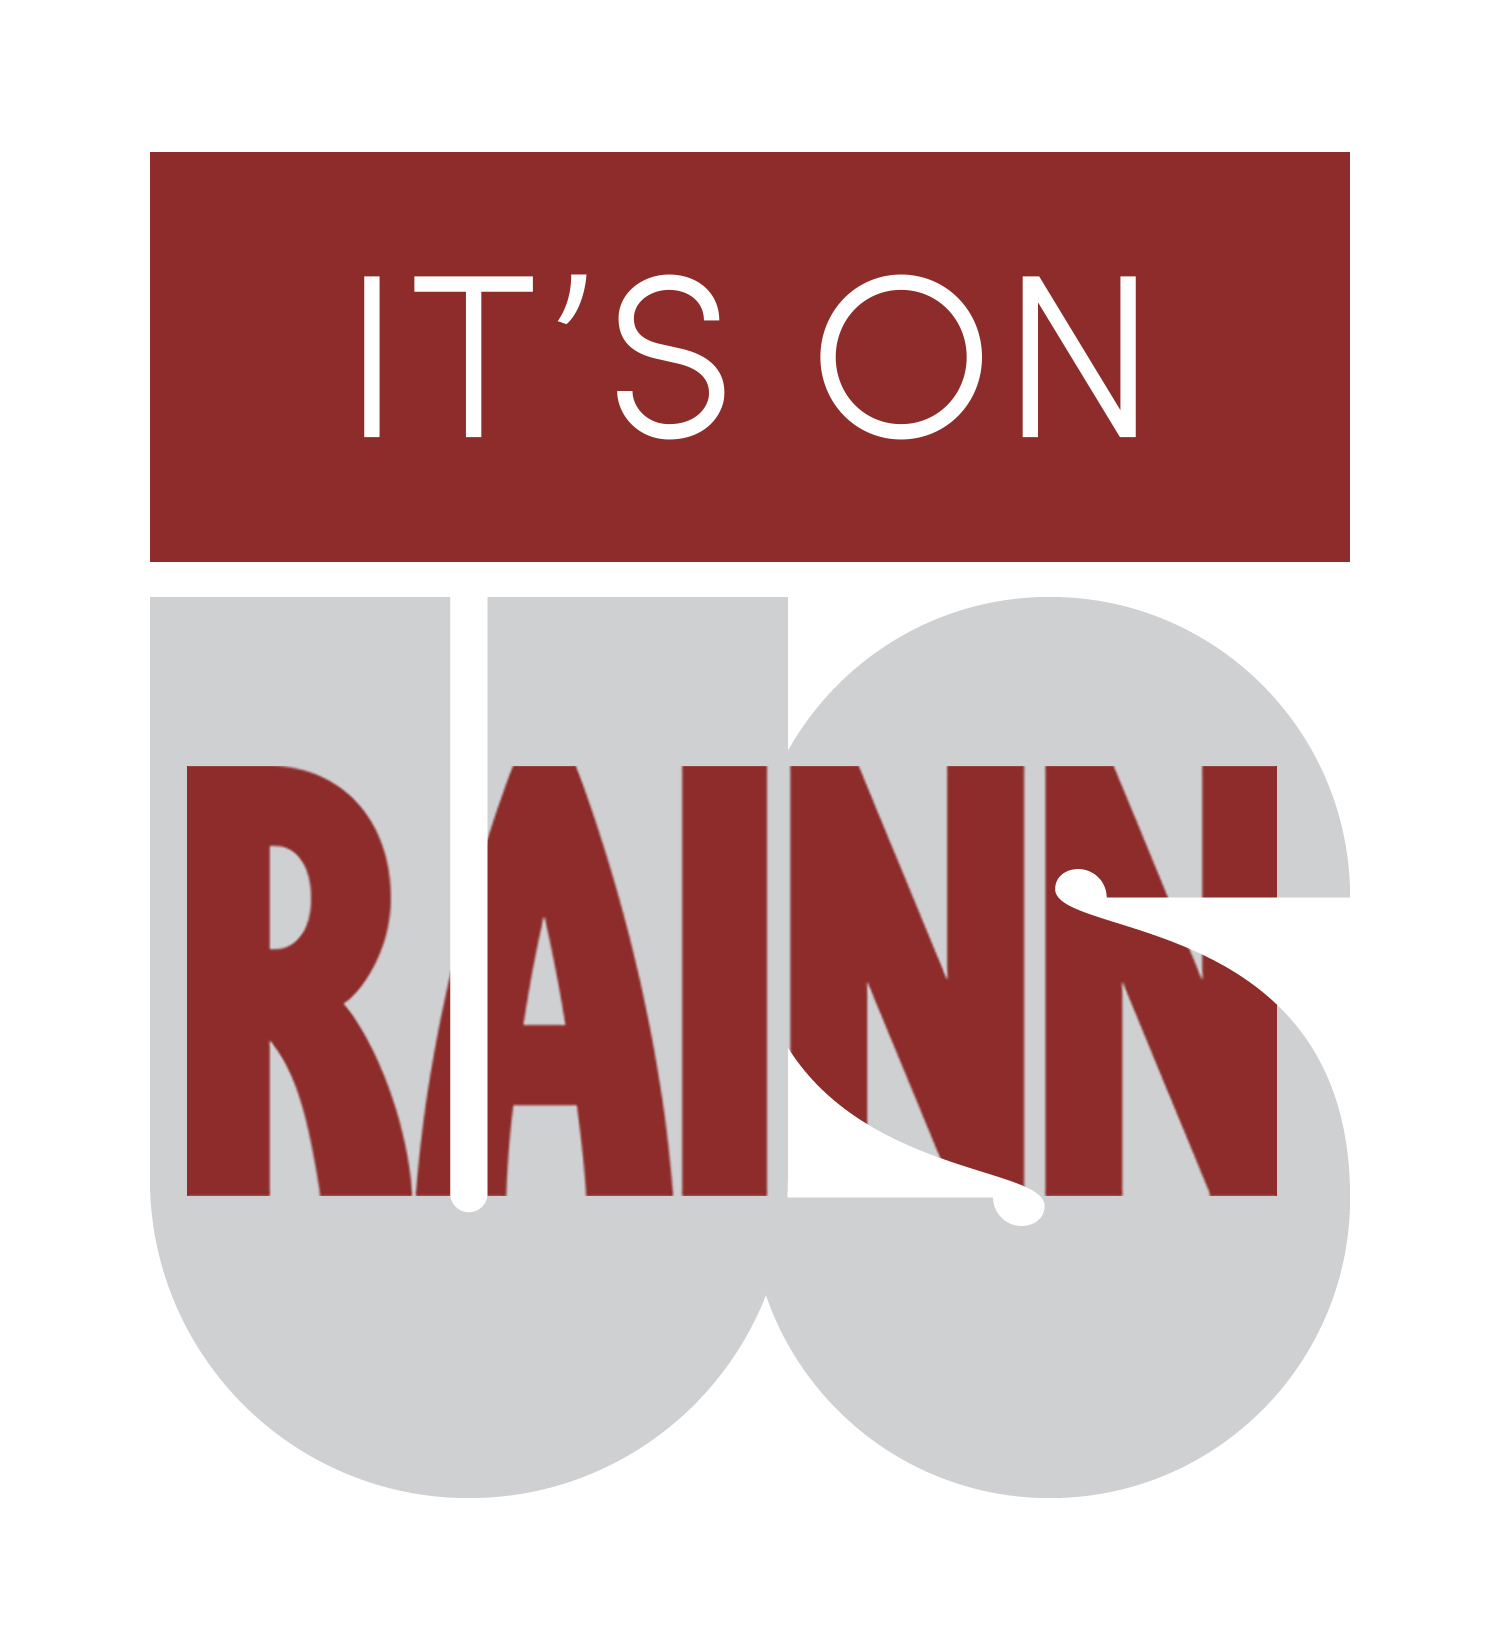 It's on us RAINN logo